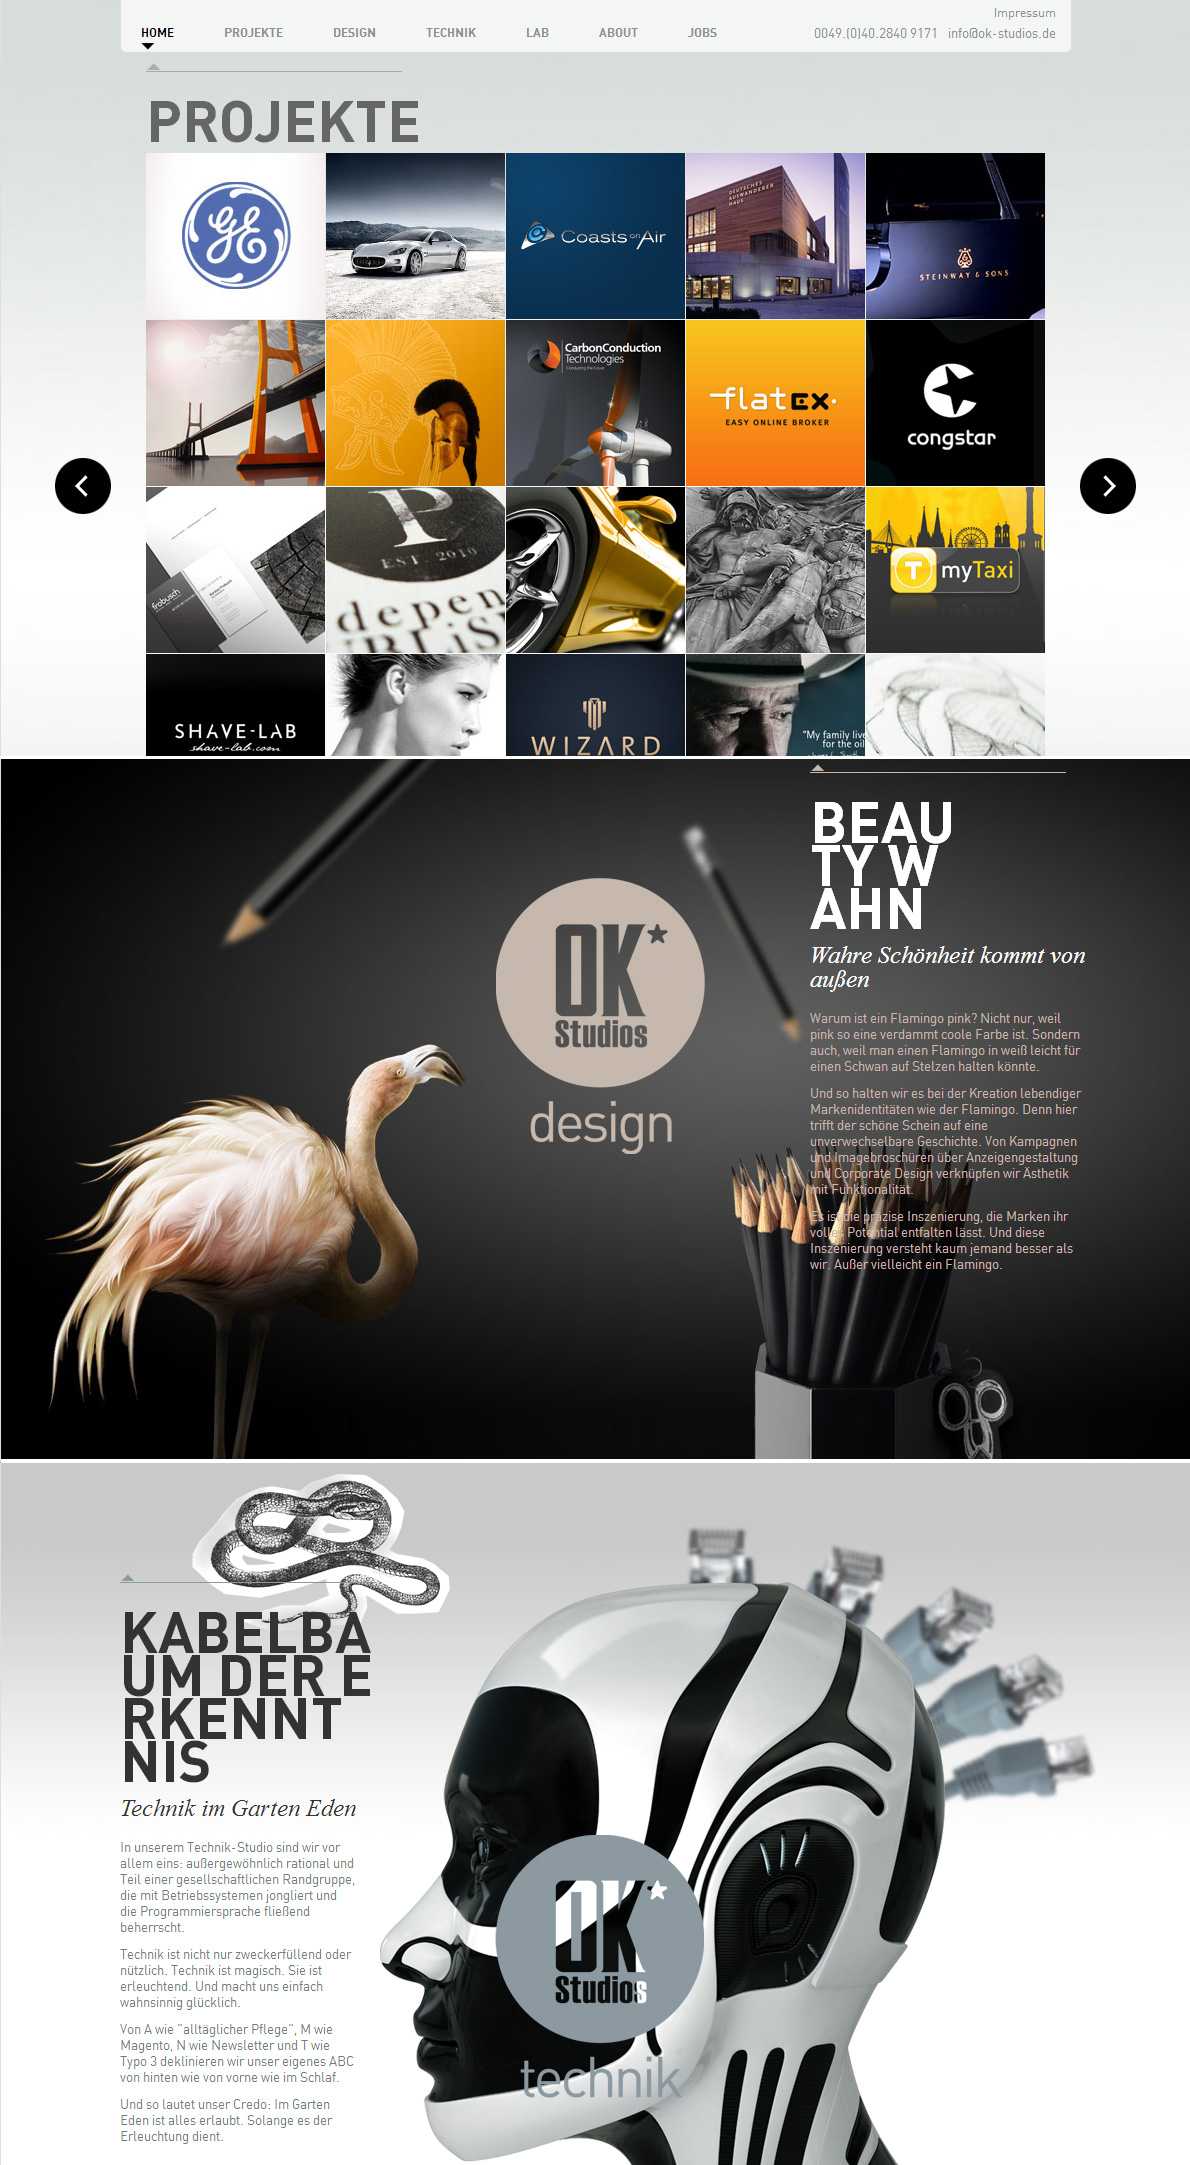 OK-Studios是提供网页设计，CI企业形象设计的互动机构。